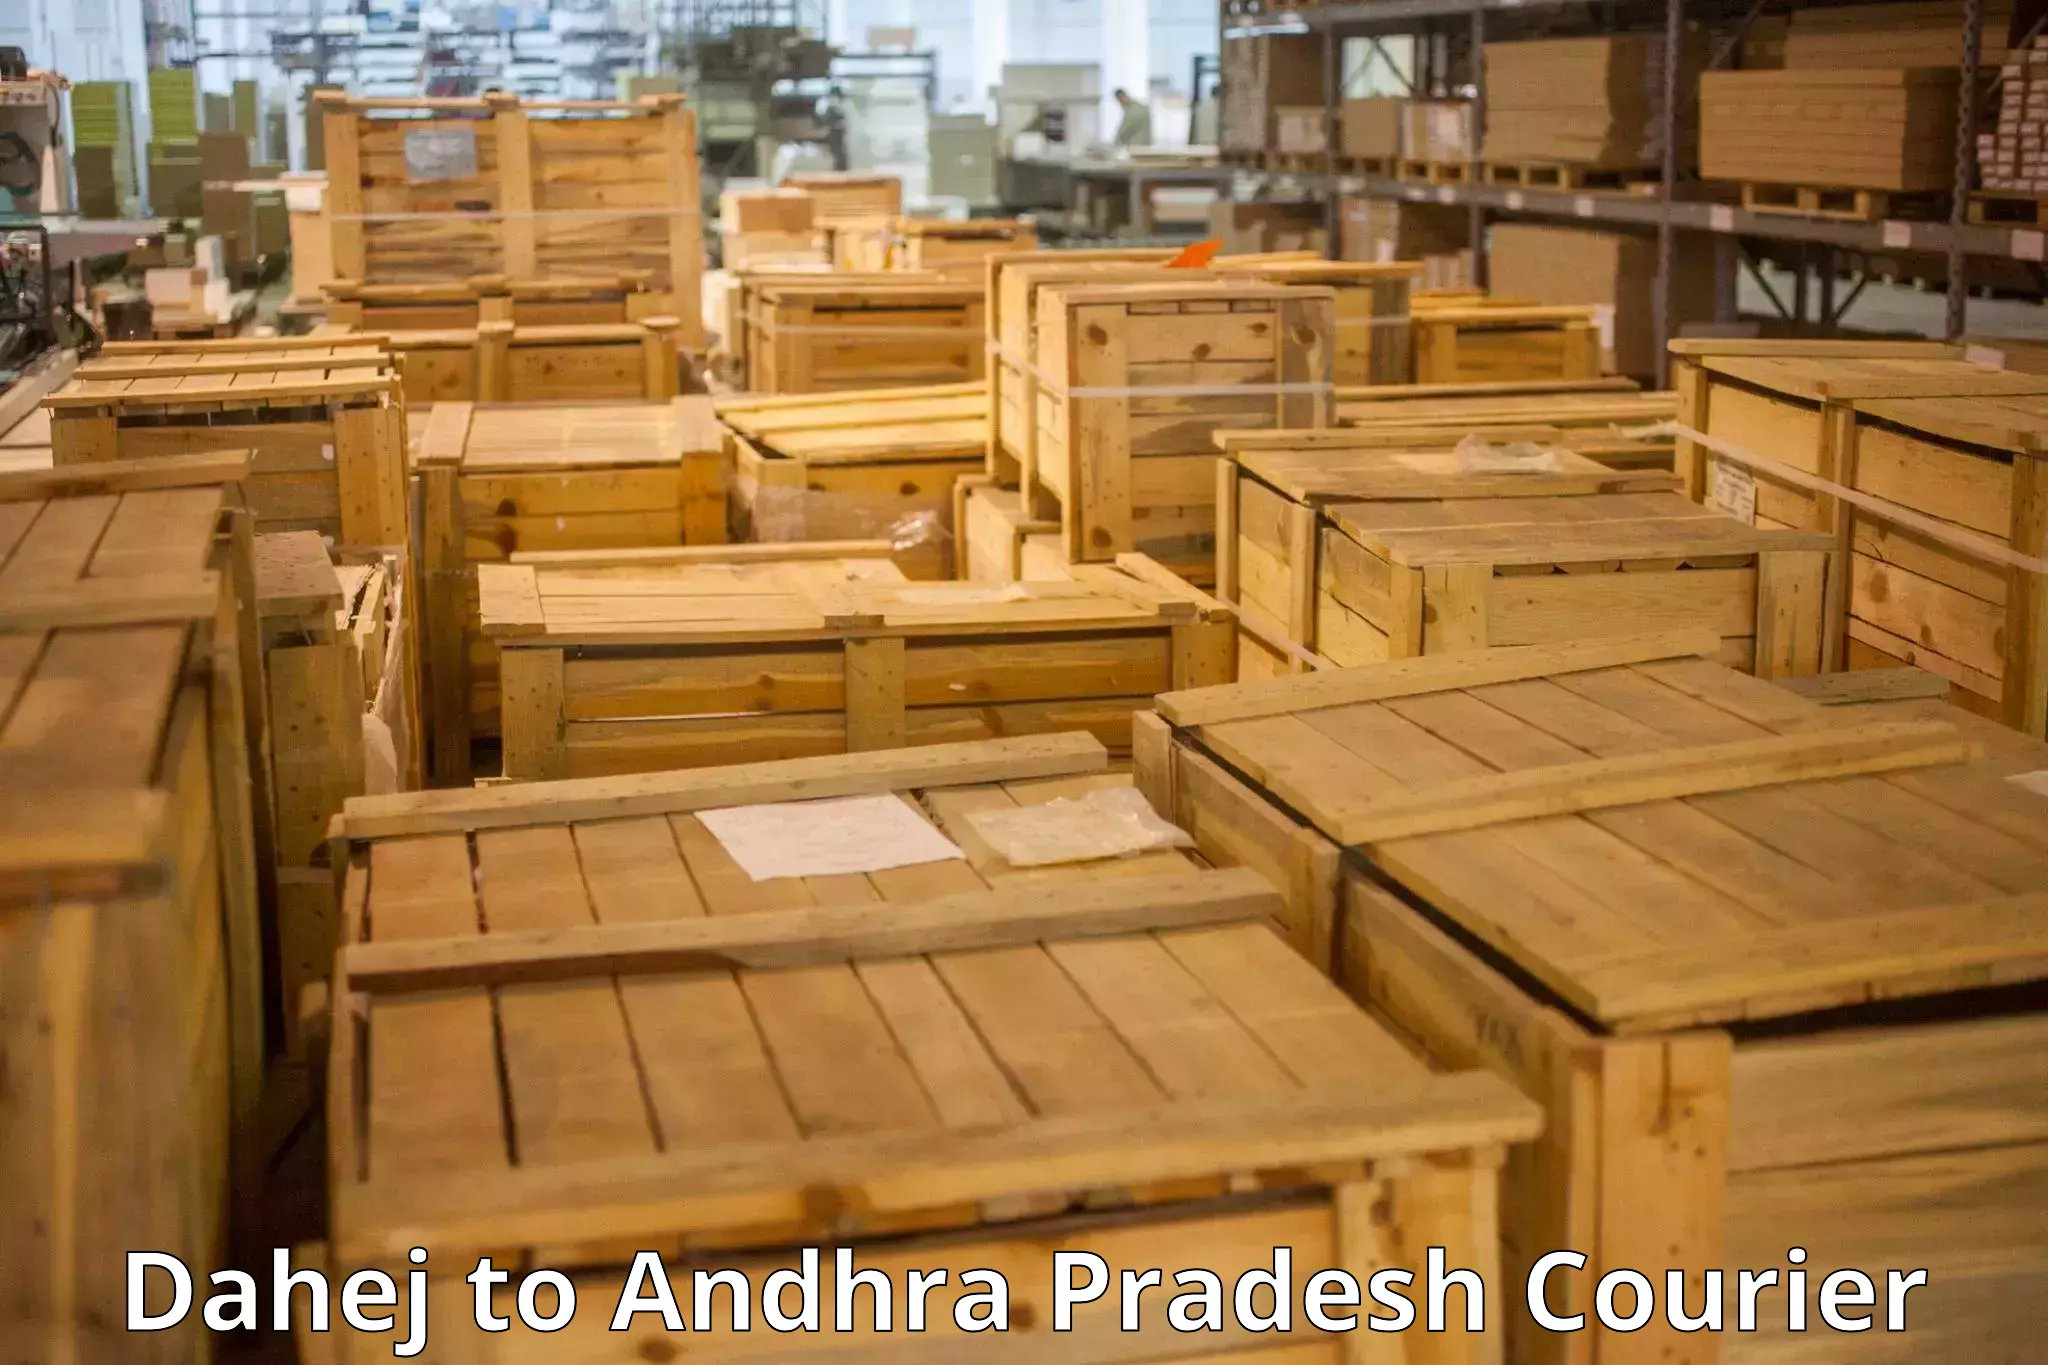 Luggage shipment specialists Dahej to Andhra Pradesh